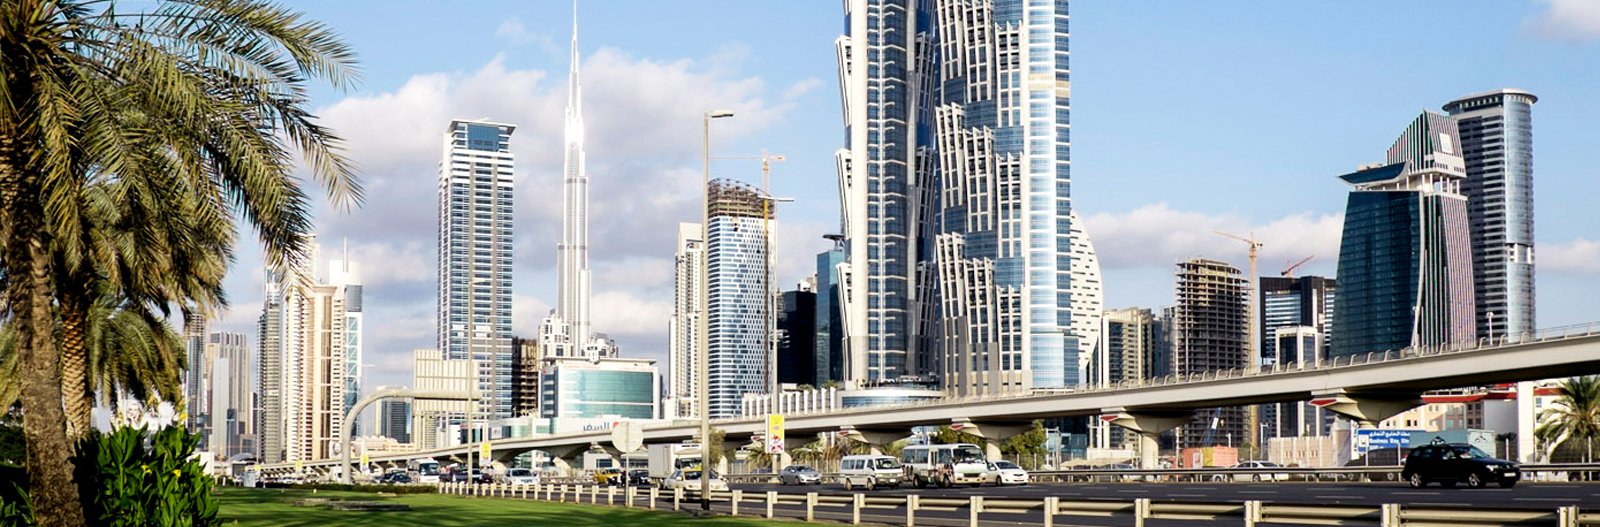 Pension and Retirement Planning Advisors  | Insurance Companies In Dubai
